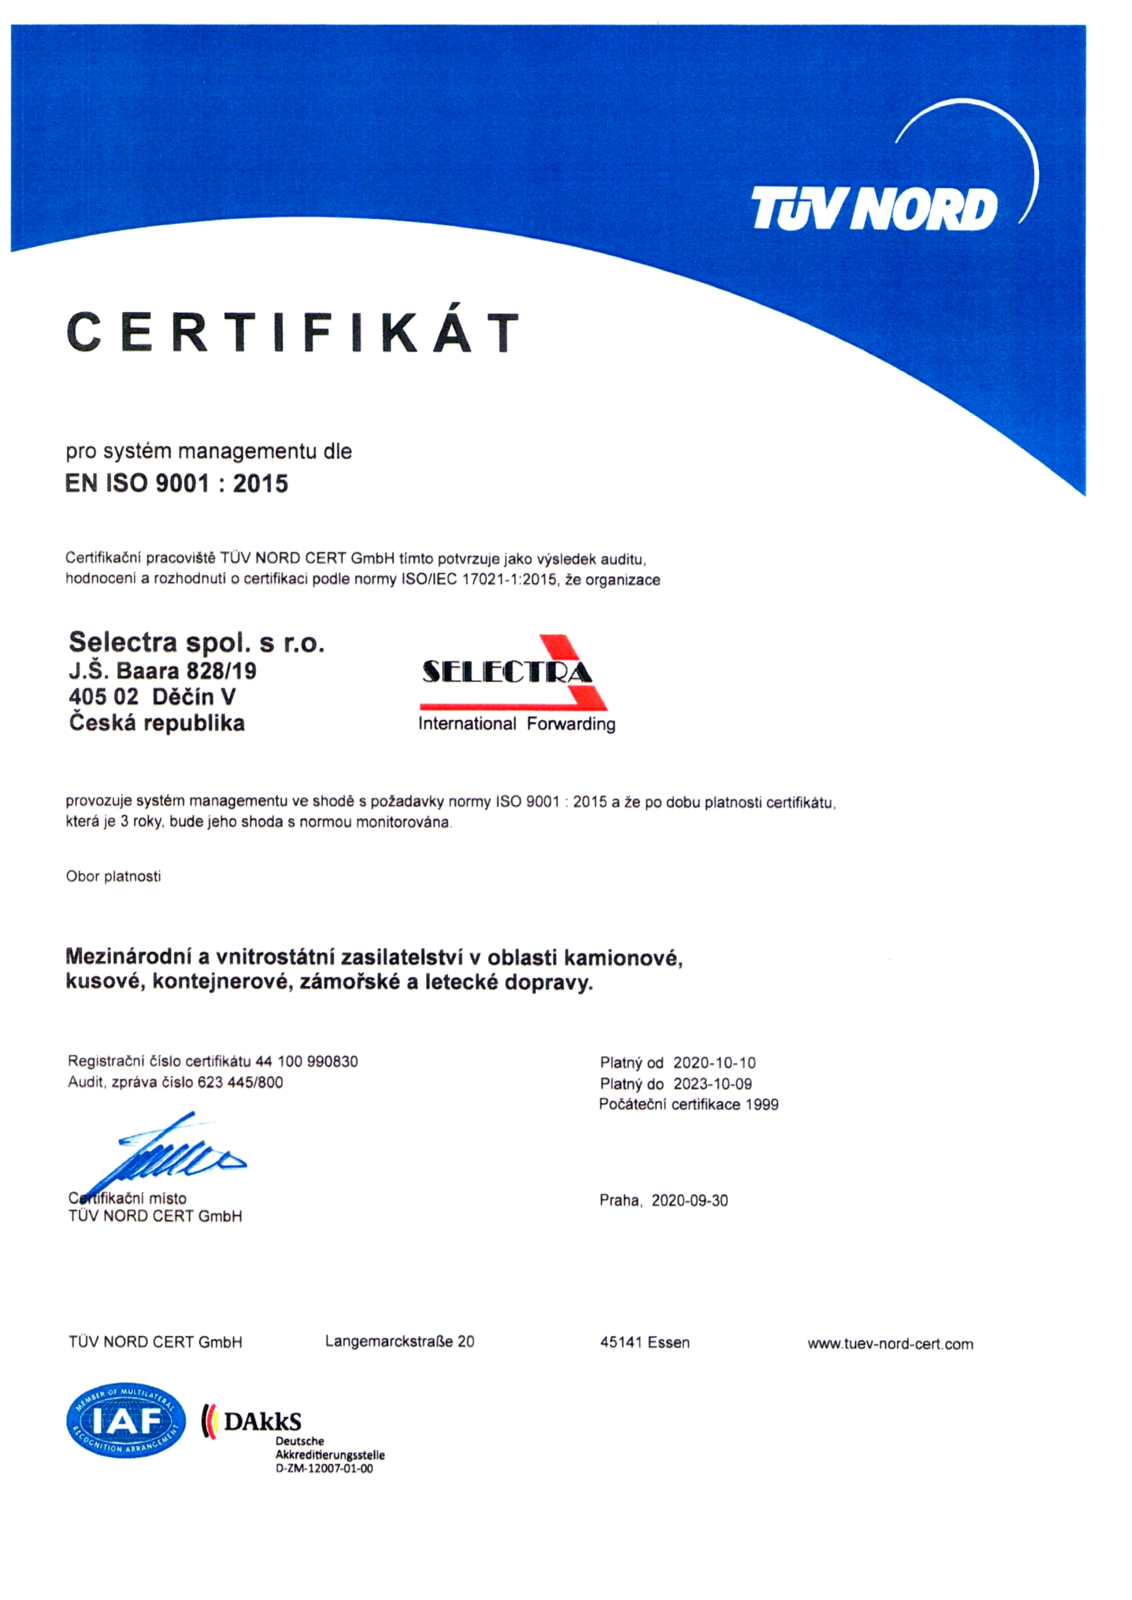 ISO Certifikát 20201010 CZ.png